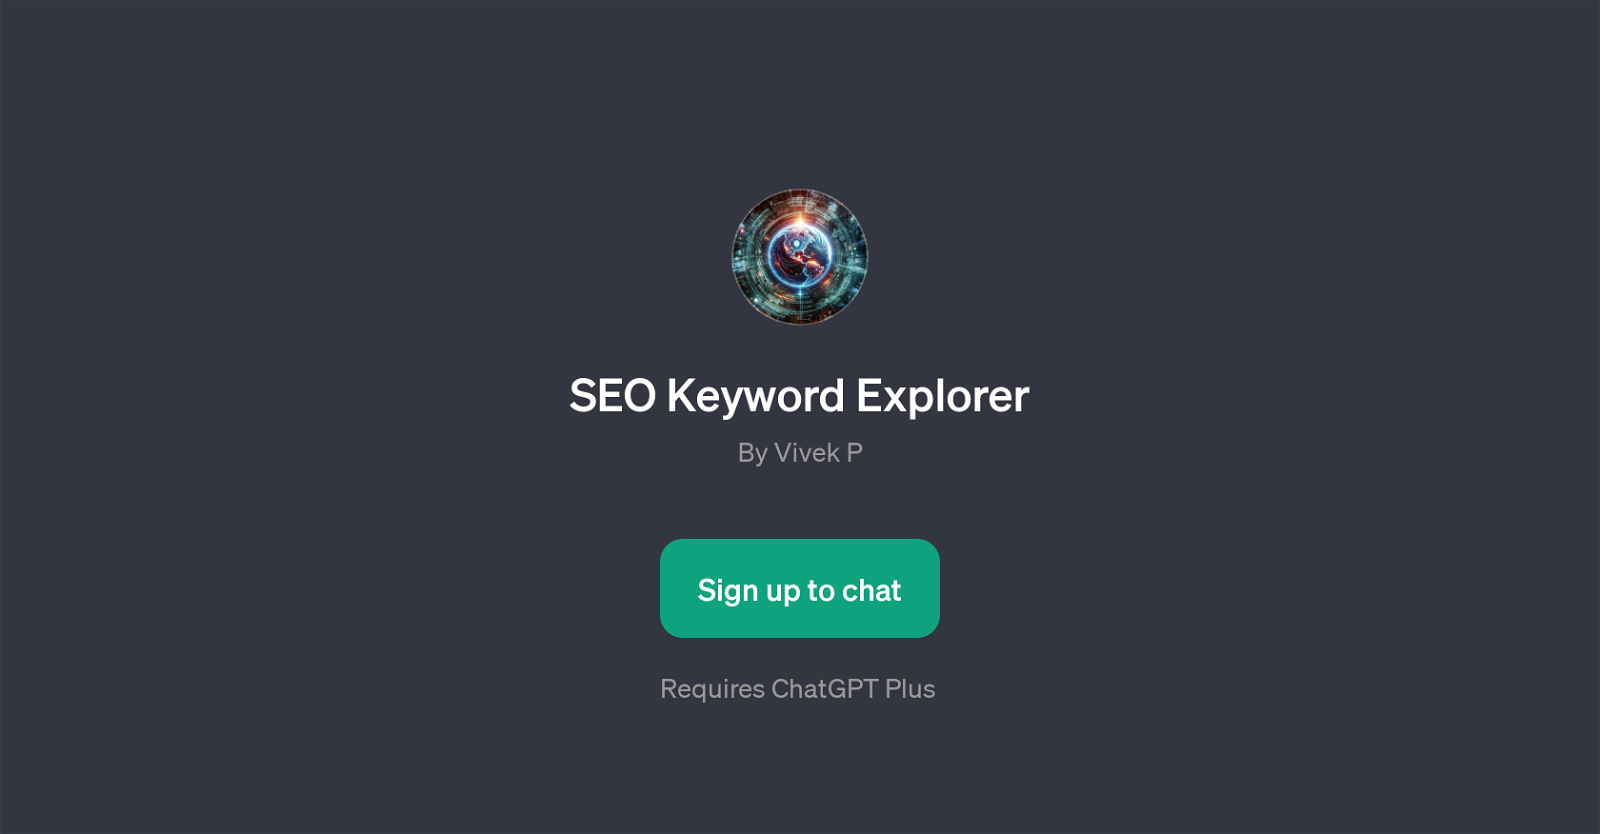 SEO Keyword Explorer website